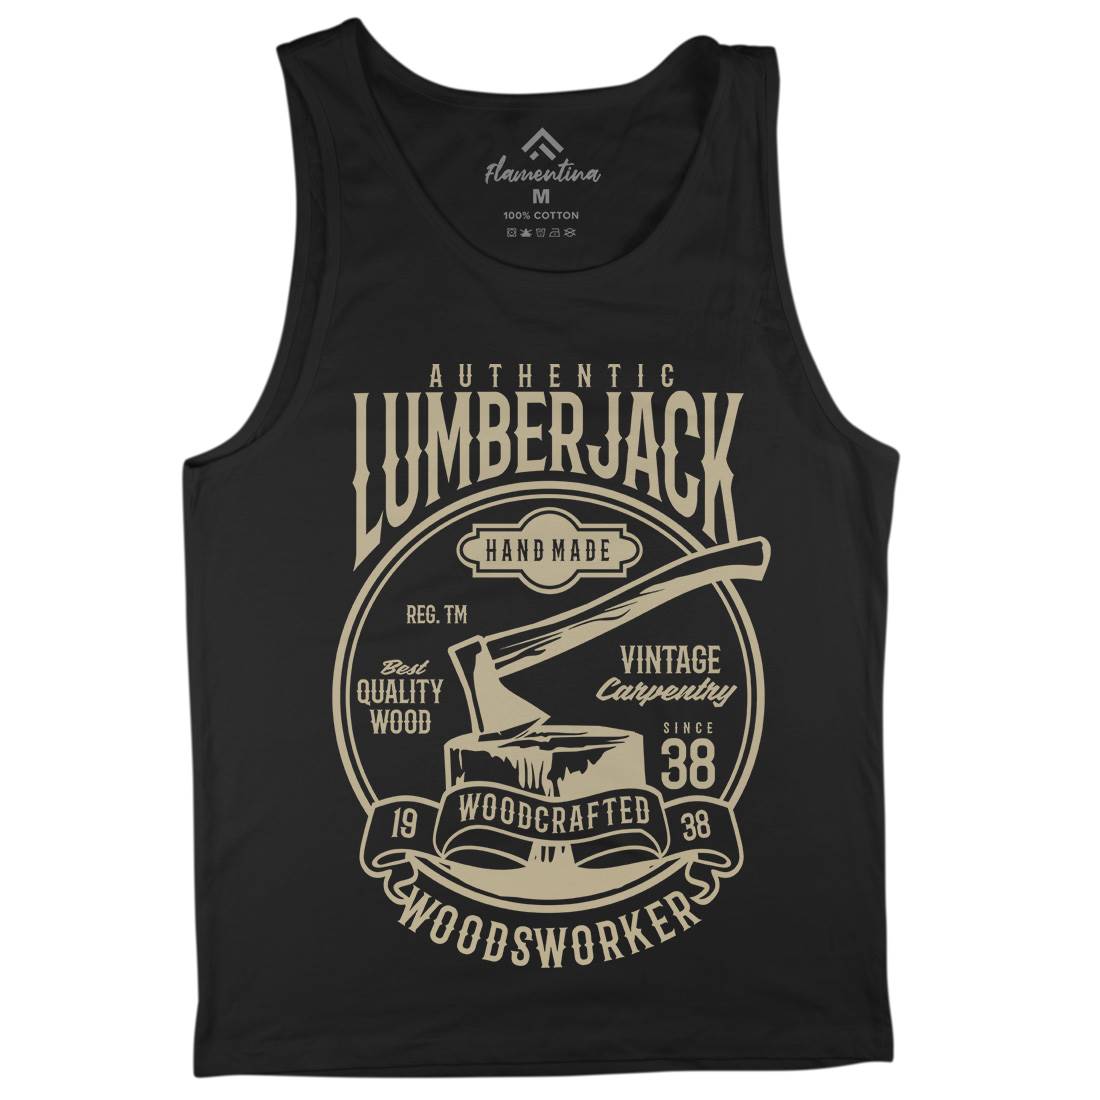 Authentic Lumberjack Mens Tank Top Vest Retro B181